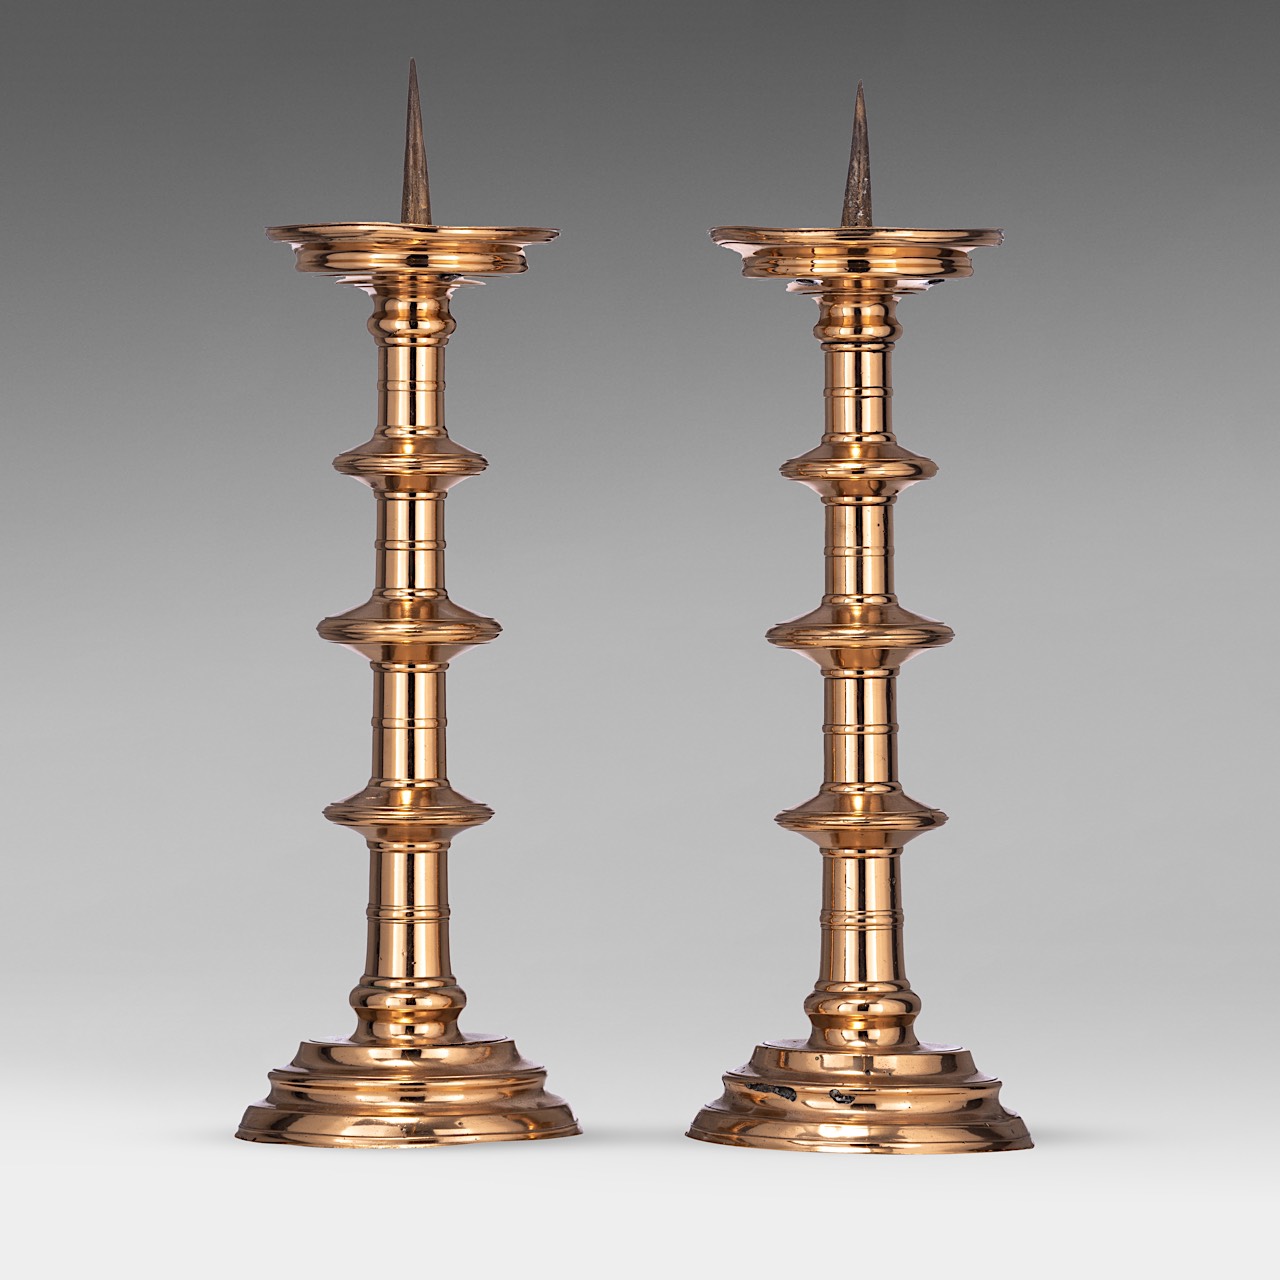 A pair of pricket candlesticks, 16thC, H 55 - 56 cm